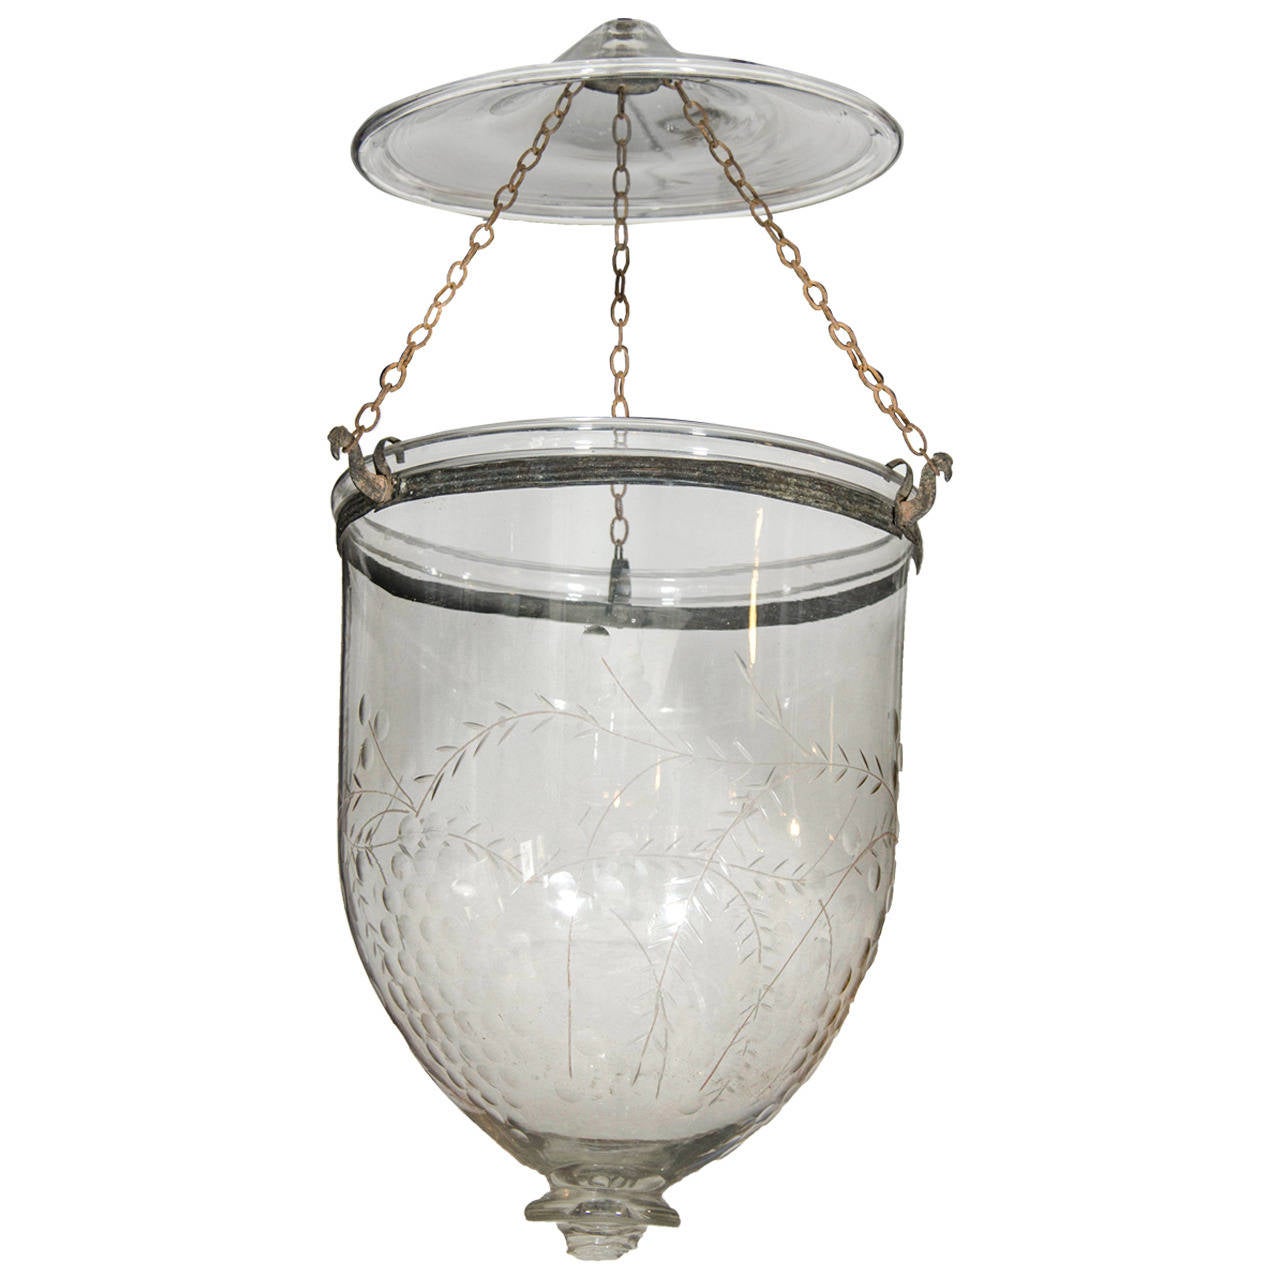 Antique English Glass Bell Lantern Made circa 1880